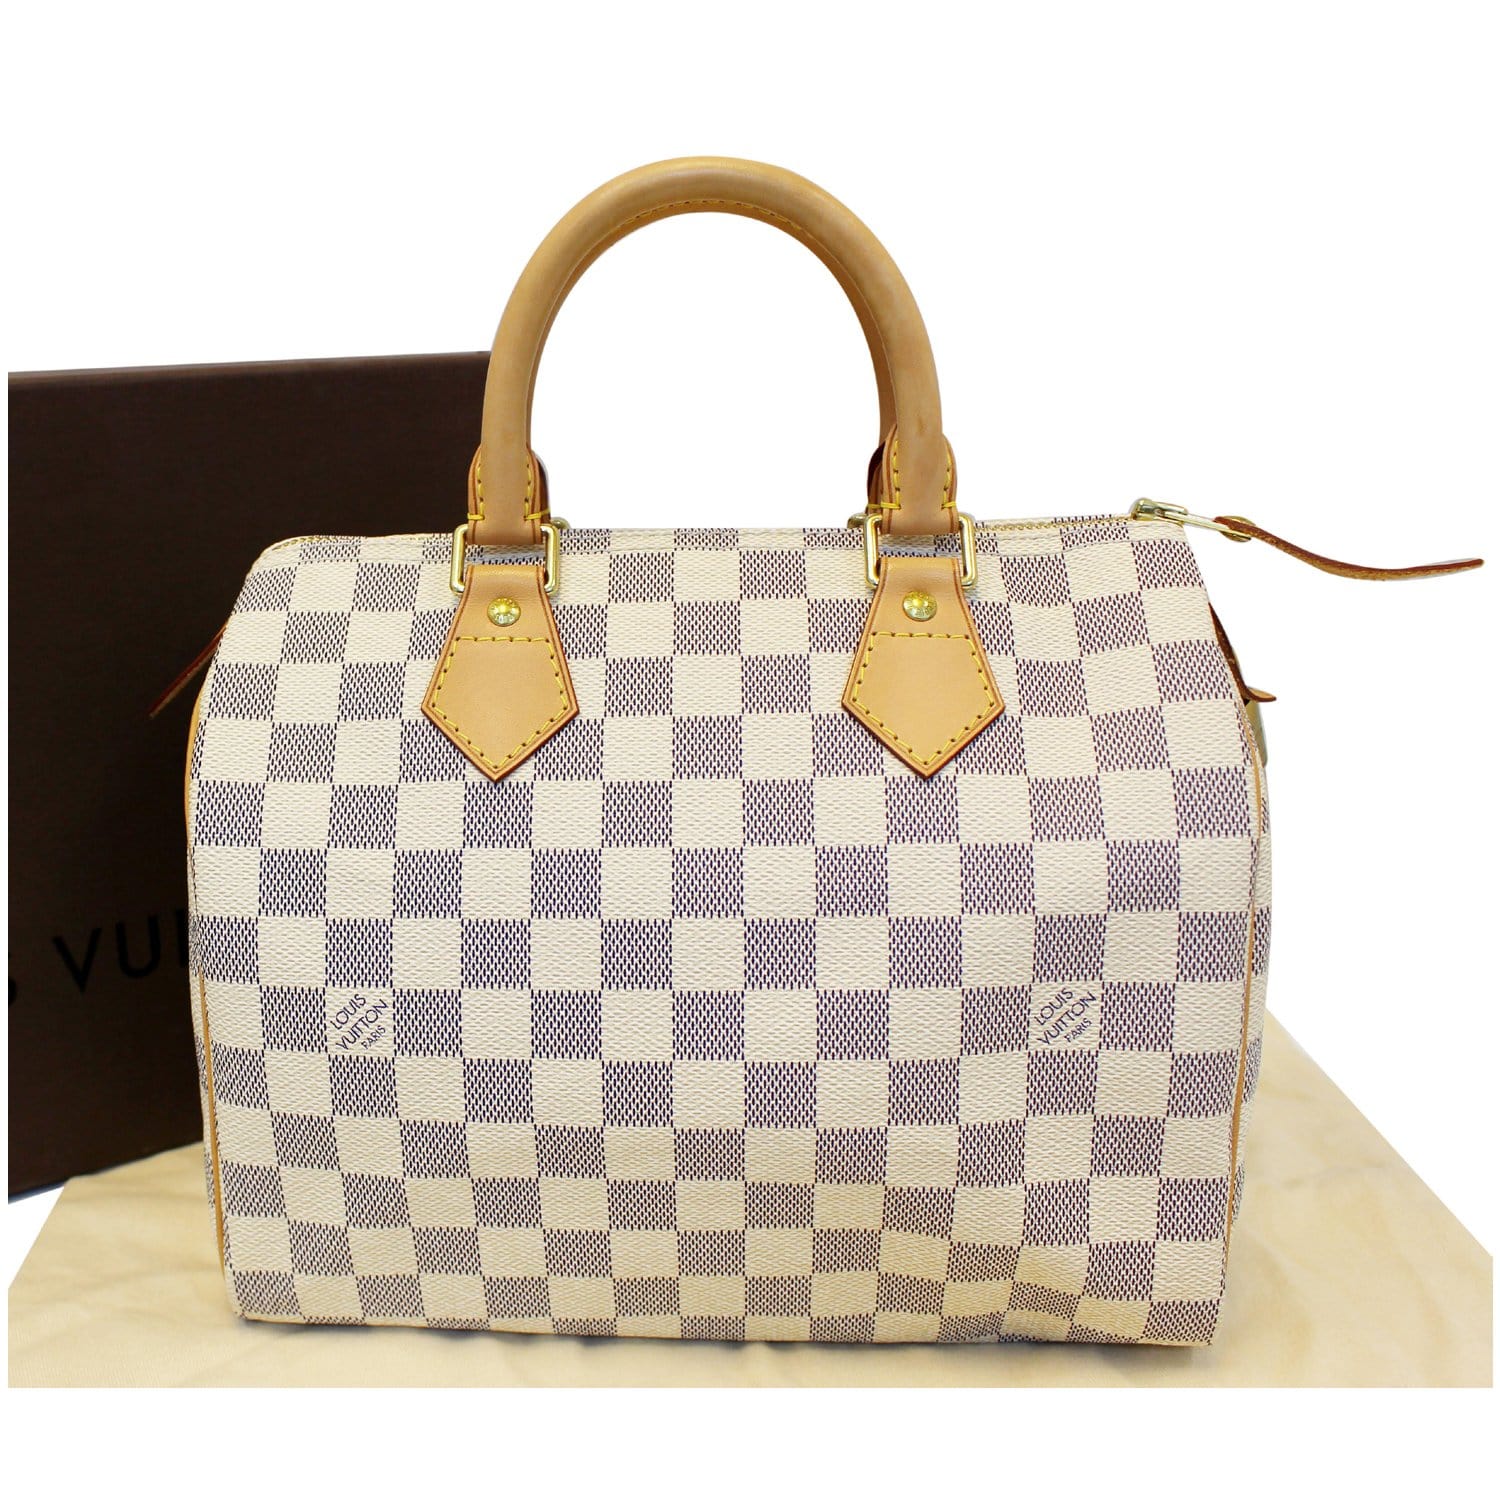 Authentic Louis Vuitton Speedy 25 Damier Ebene Satchel Handbag TR3152  France